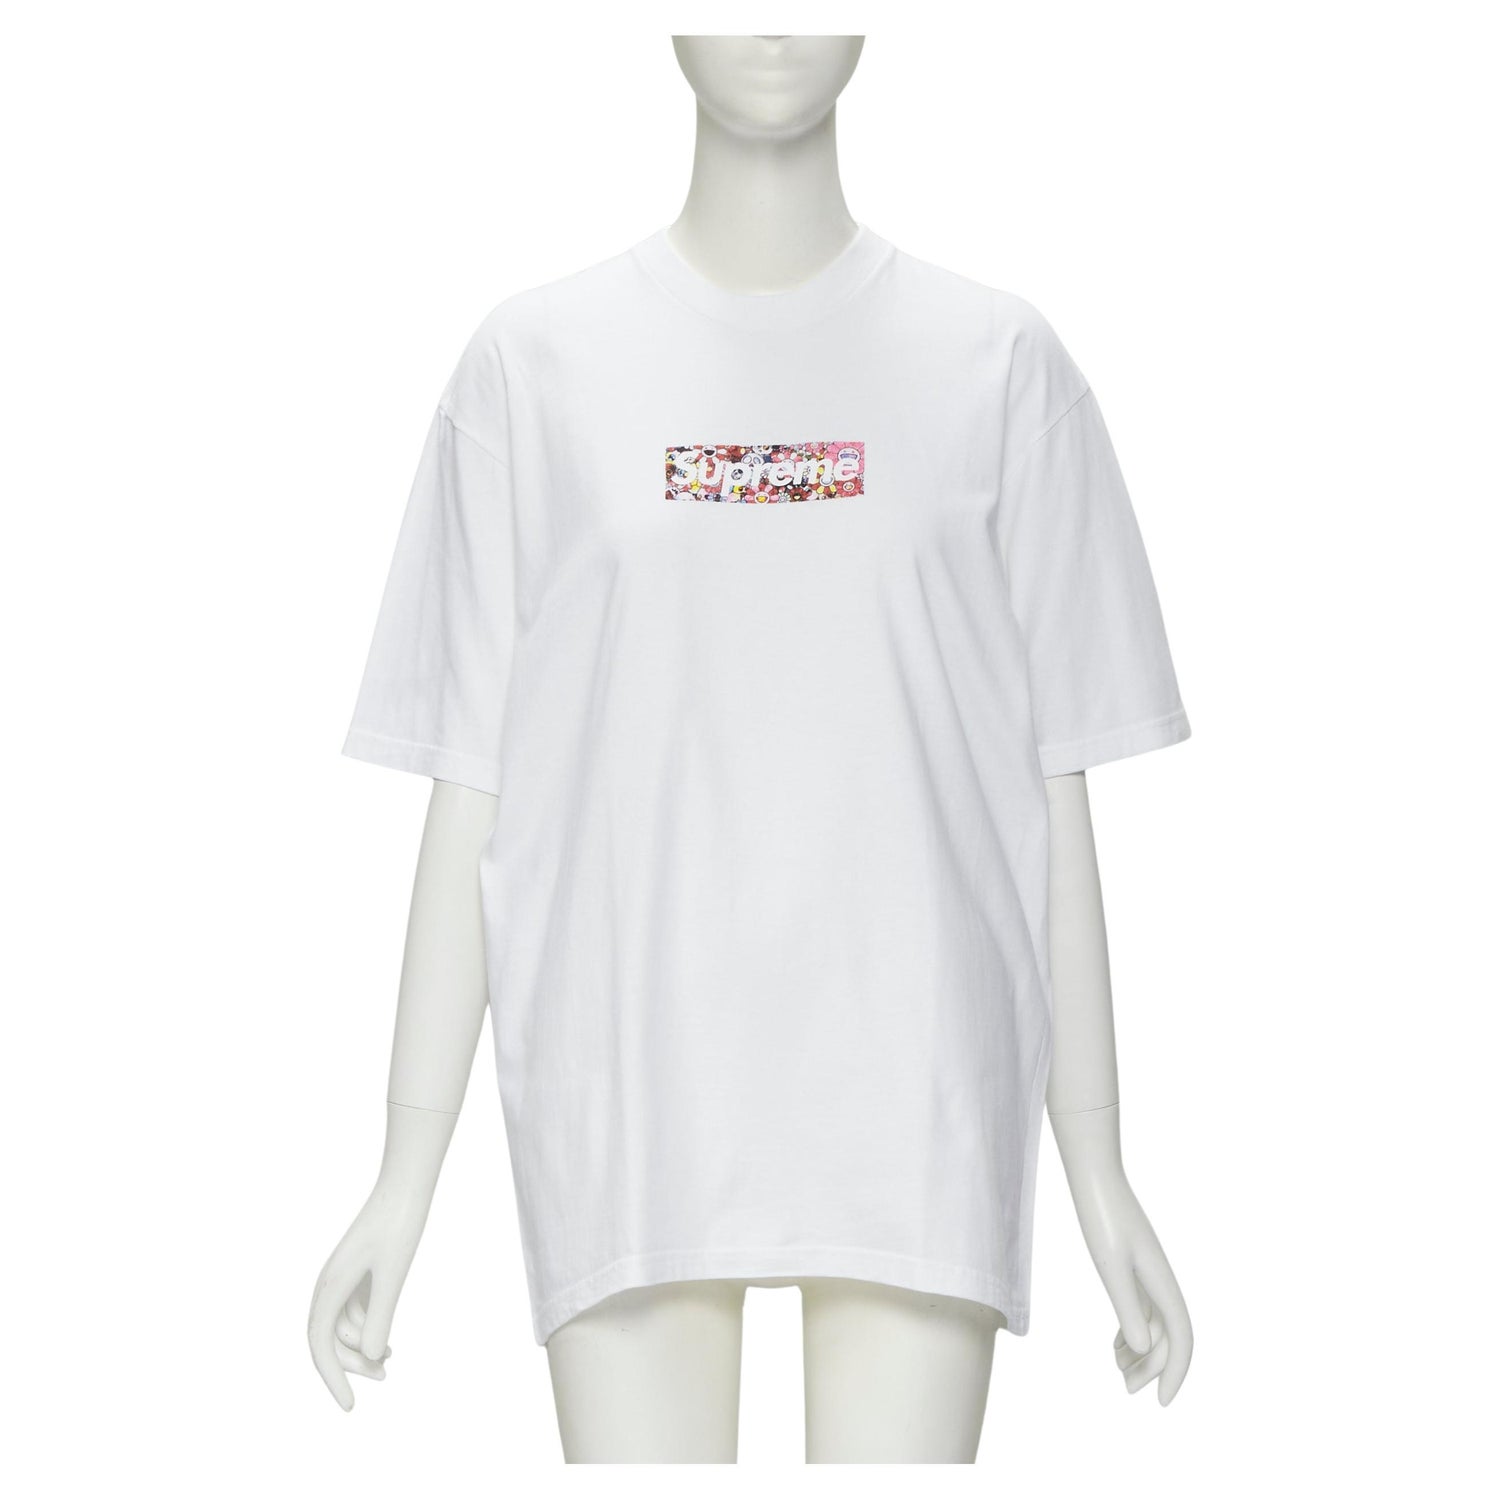 Supreme Bullet Hole Box Logo Tee T-Shirt White Sz Large for Sale